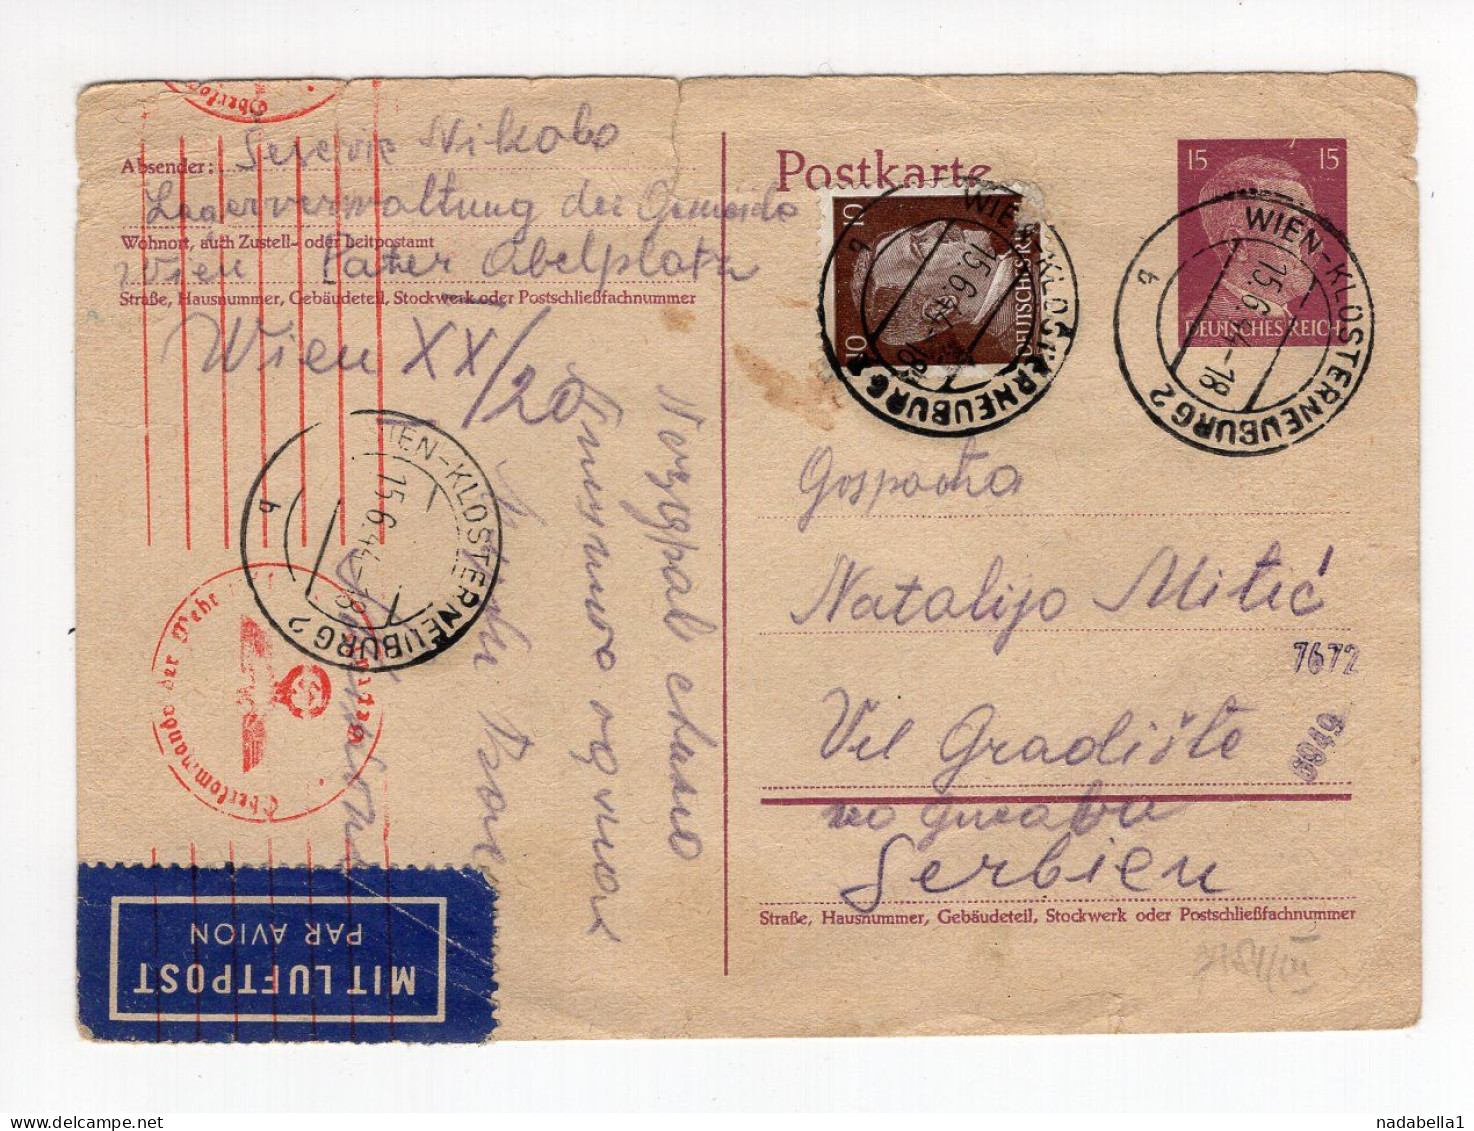 1944. GERMANY,VIENNA - KLOSTERNEUBURG TO SERBIA,AIRMAIL STATIONERY CARD,USED - Poste Aérienne & Zeppelin